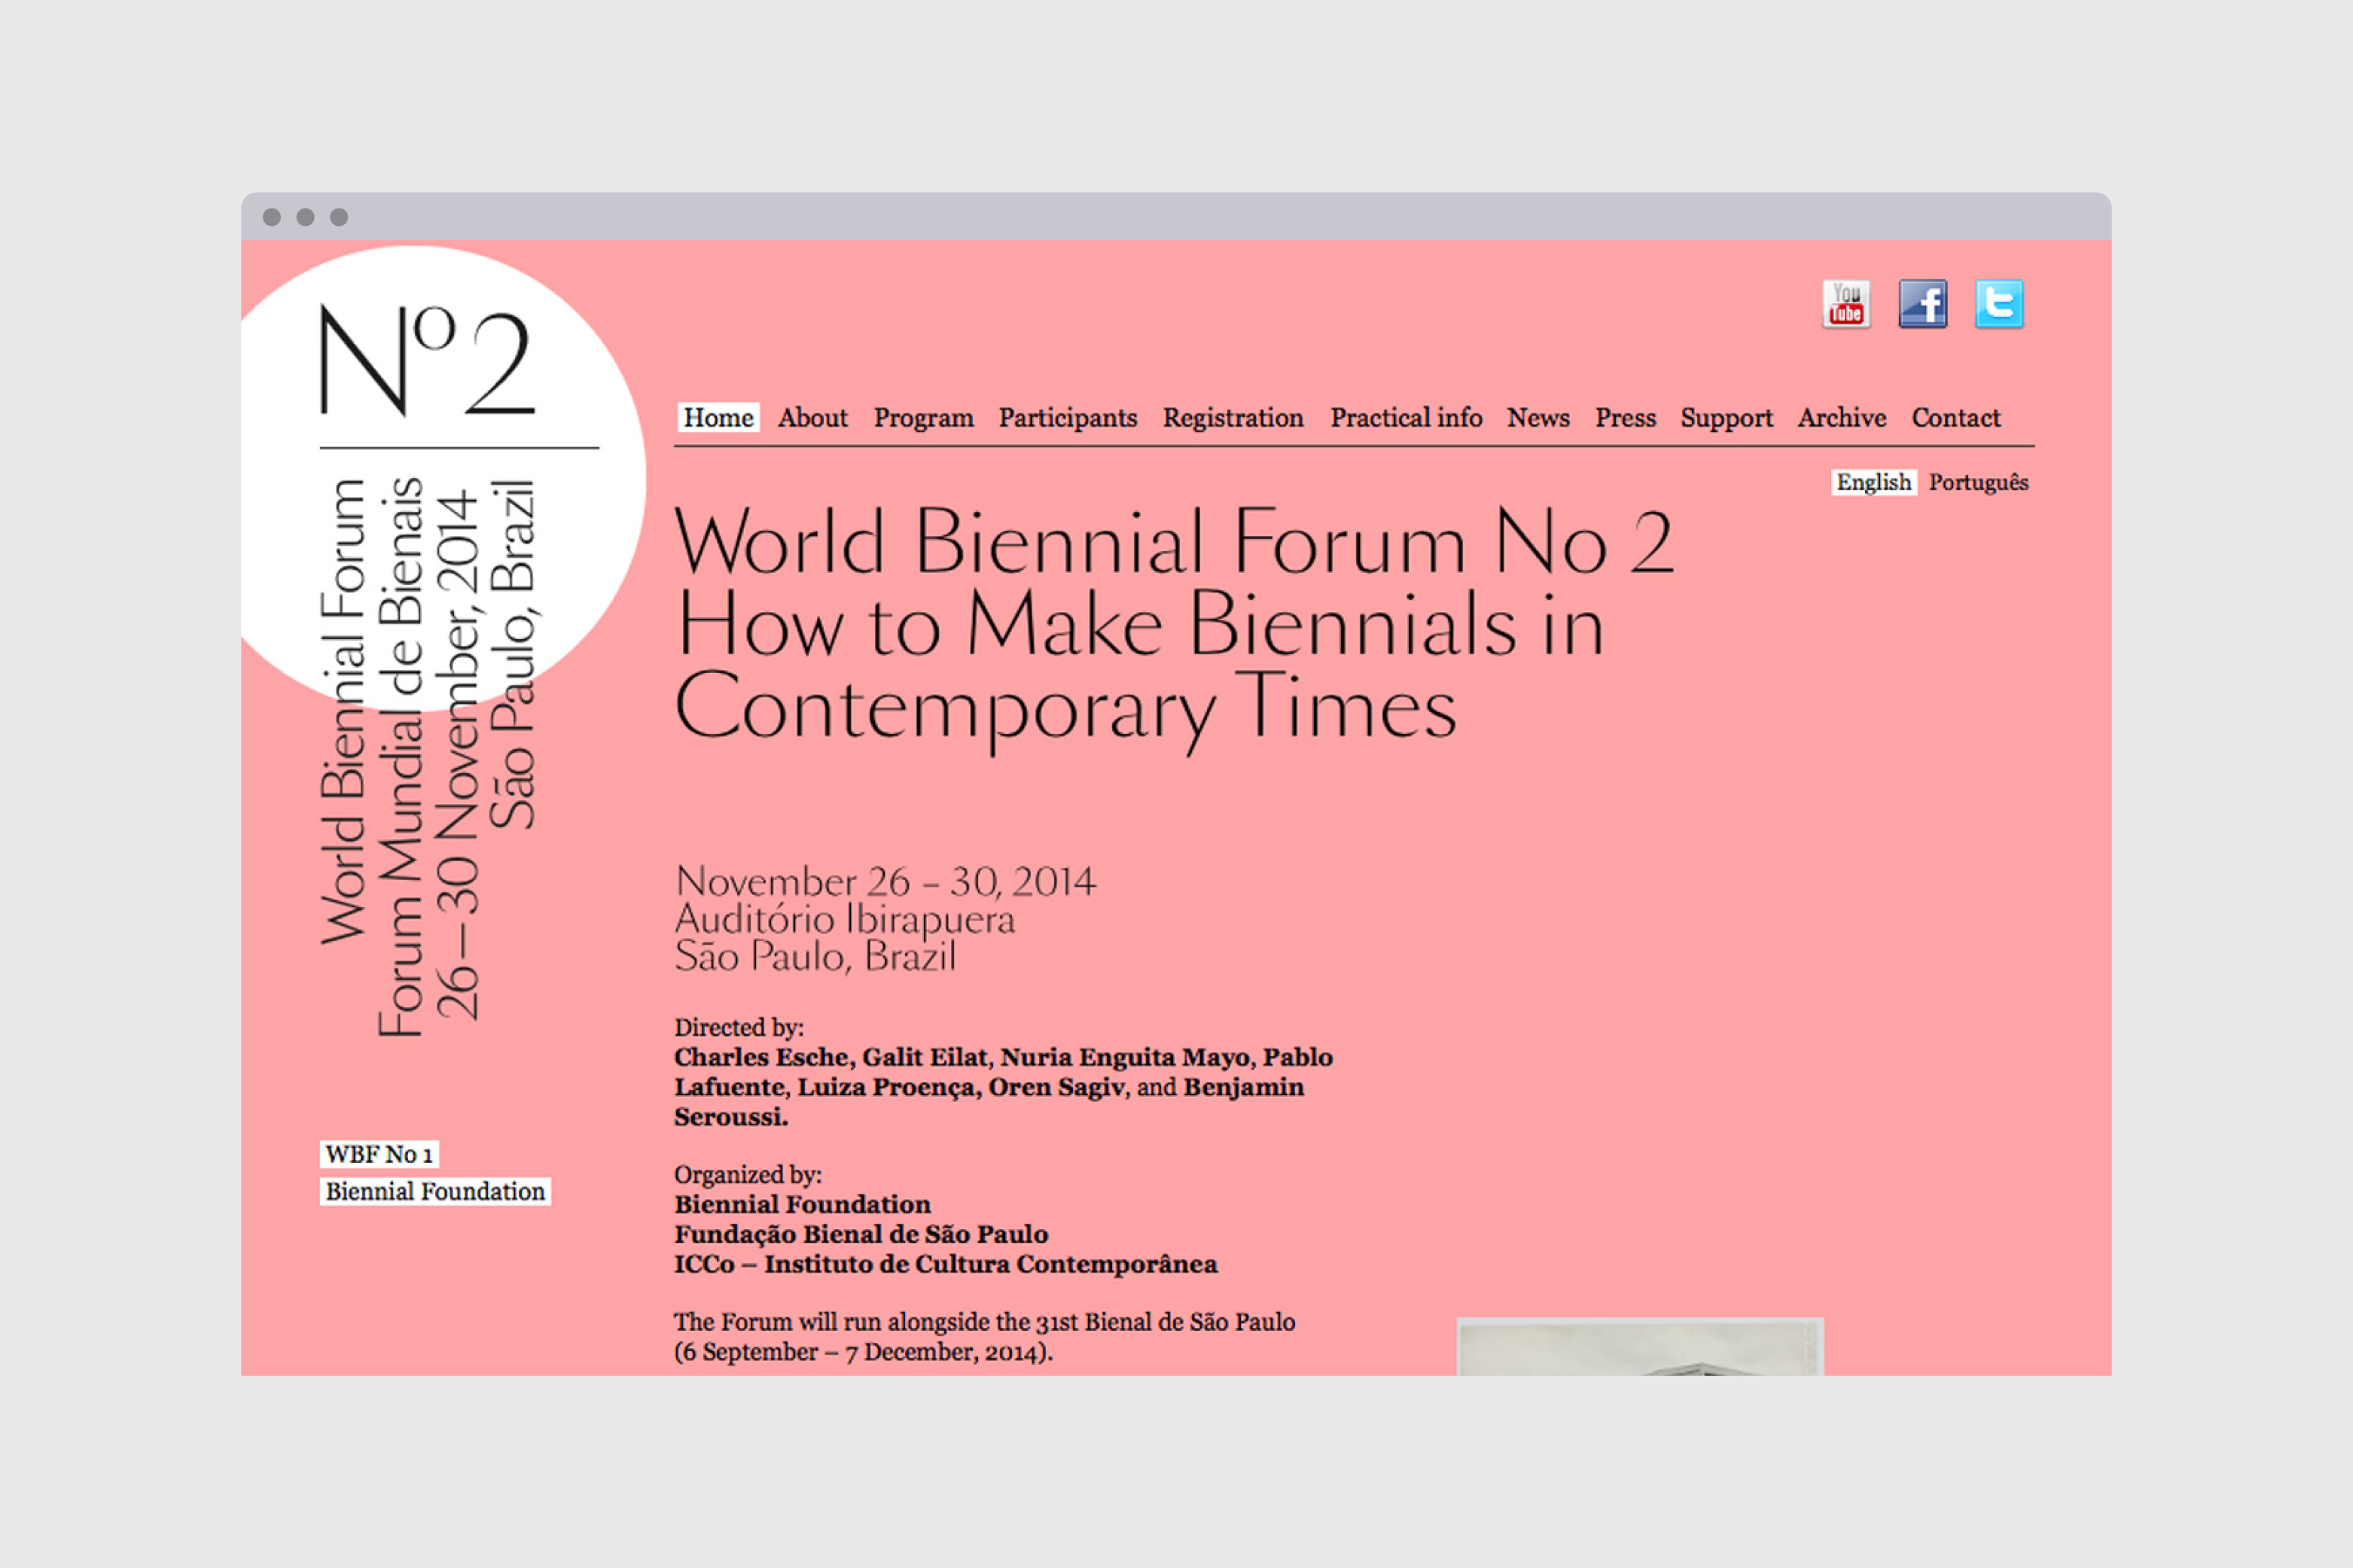 Biennial Foundation, identity, webdesign, branding, graphic design